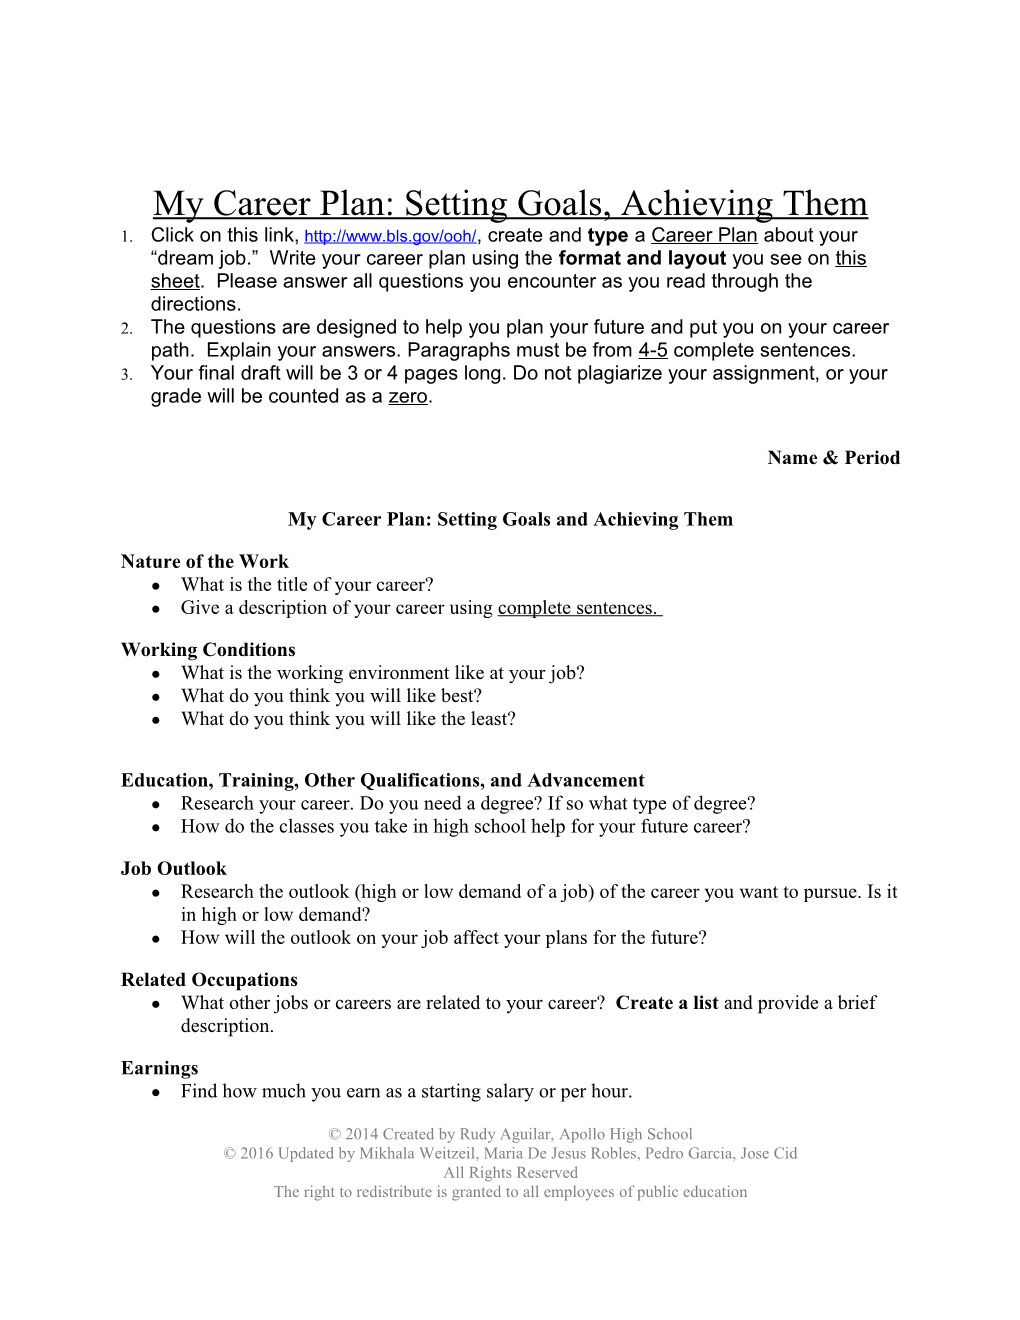 My Career Plan: Setting Goals, Achieving Them